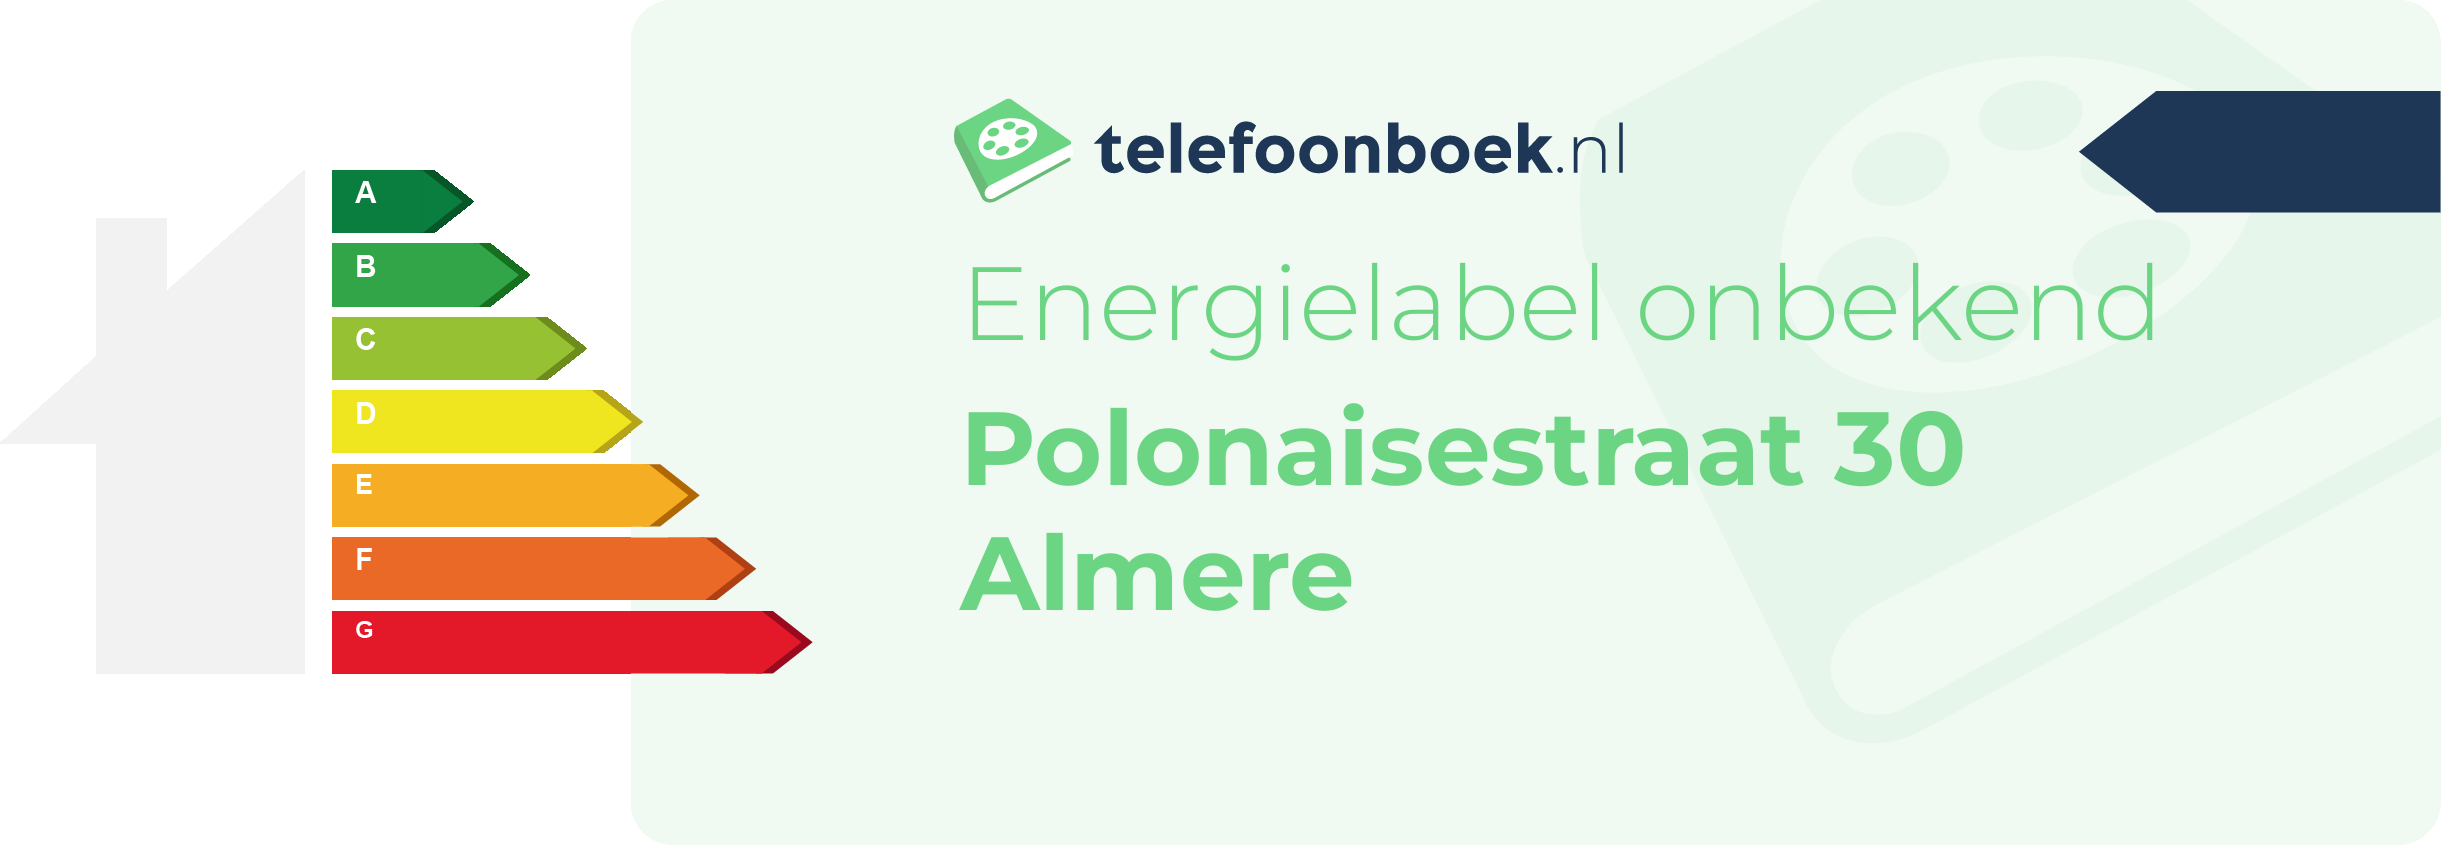 Energielabel Polonaisestraat 30 Almere